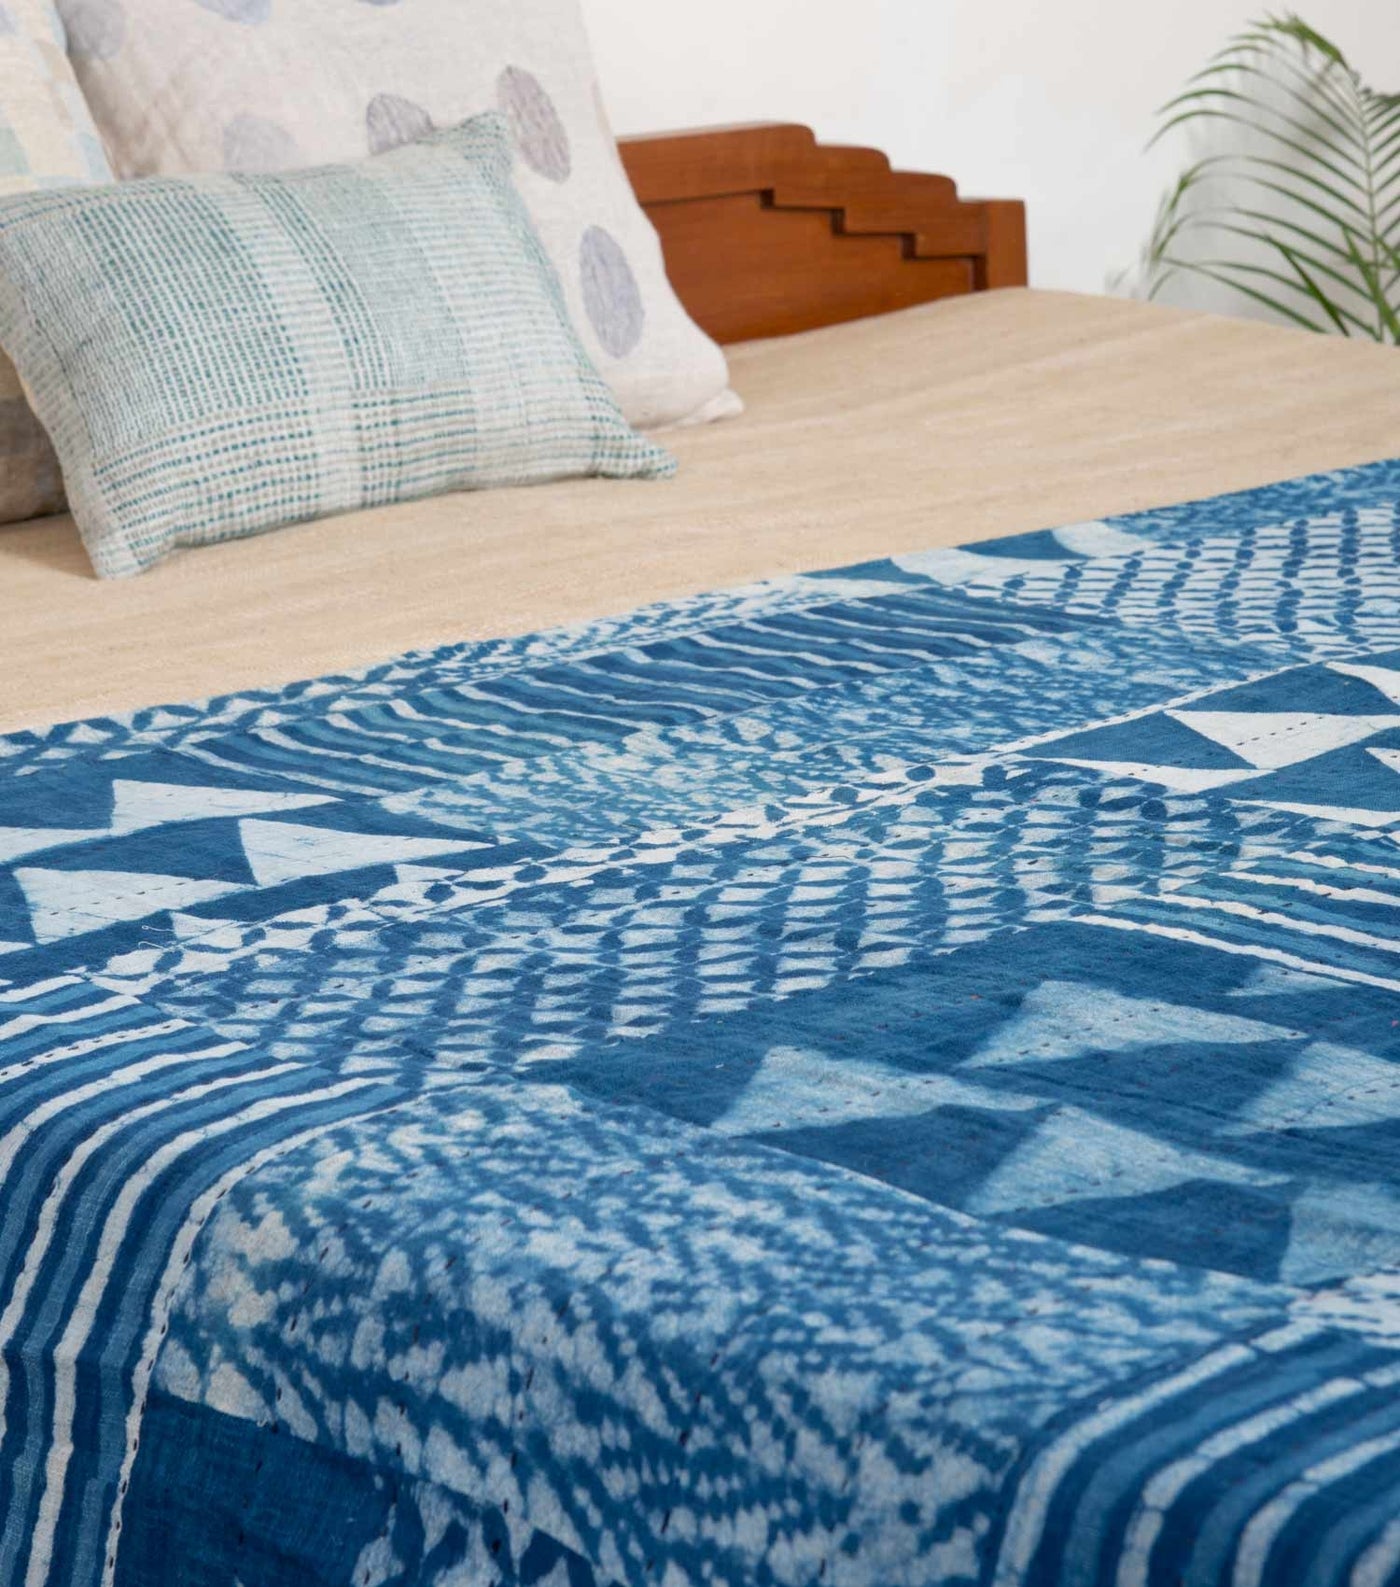 Shibori Printed Cotton Bedcover